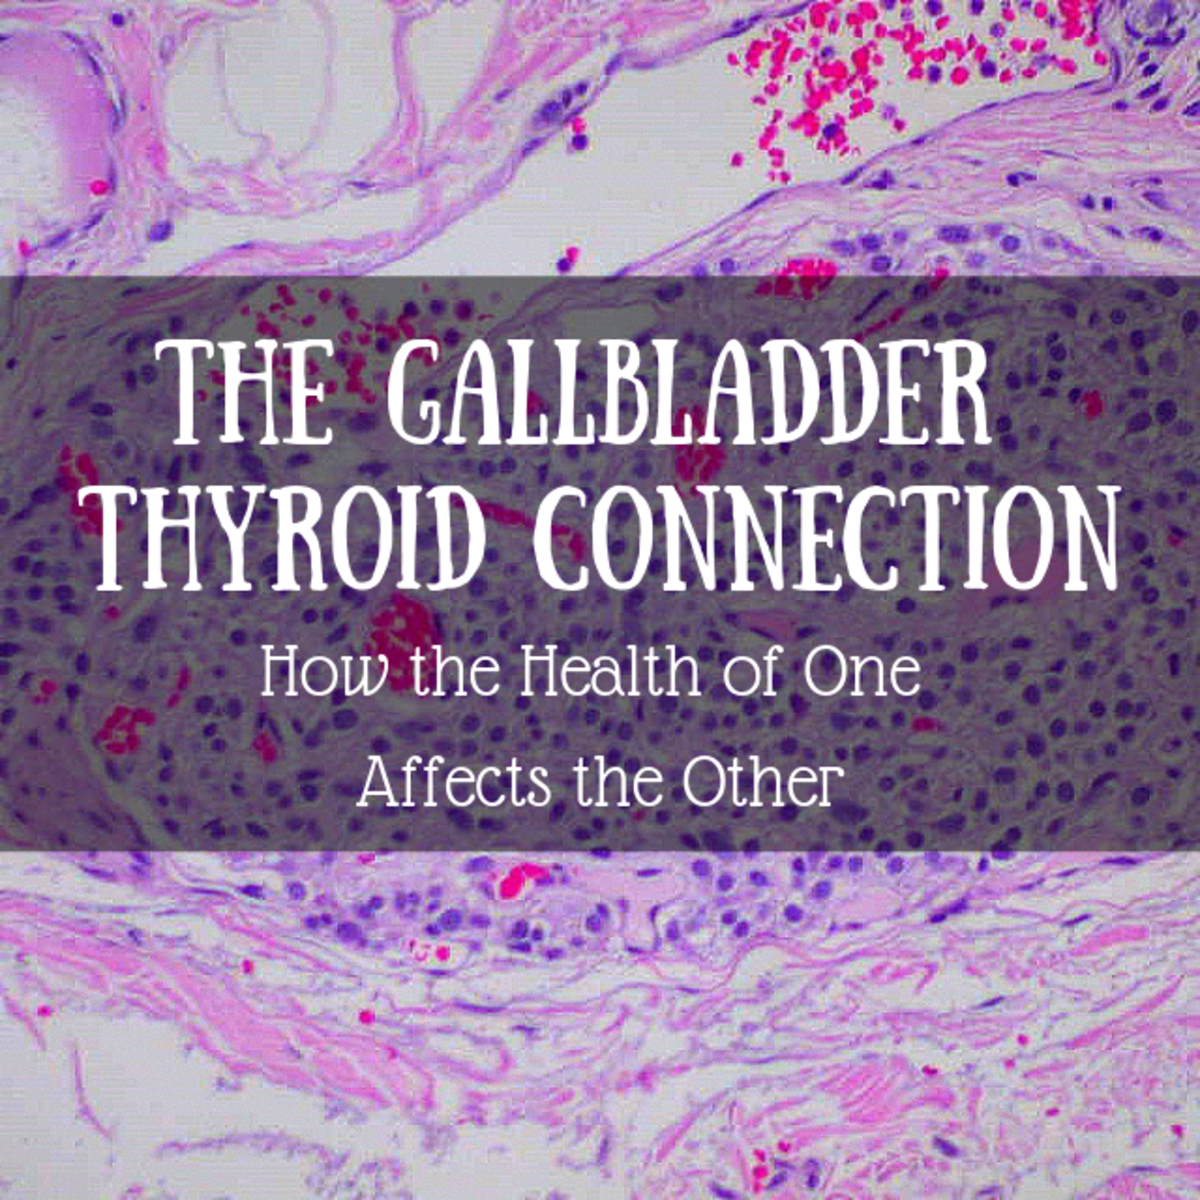 The Gallbladder Thyroid Connection